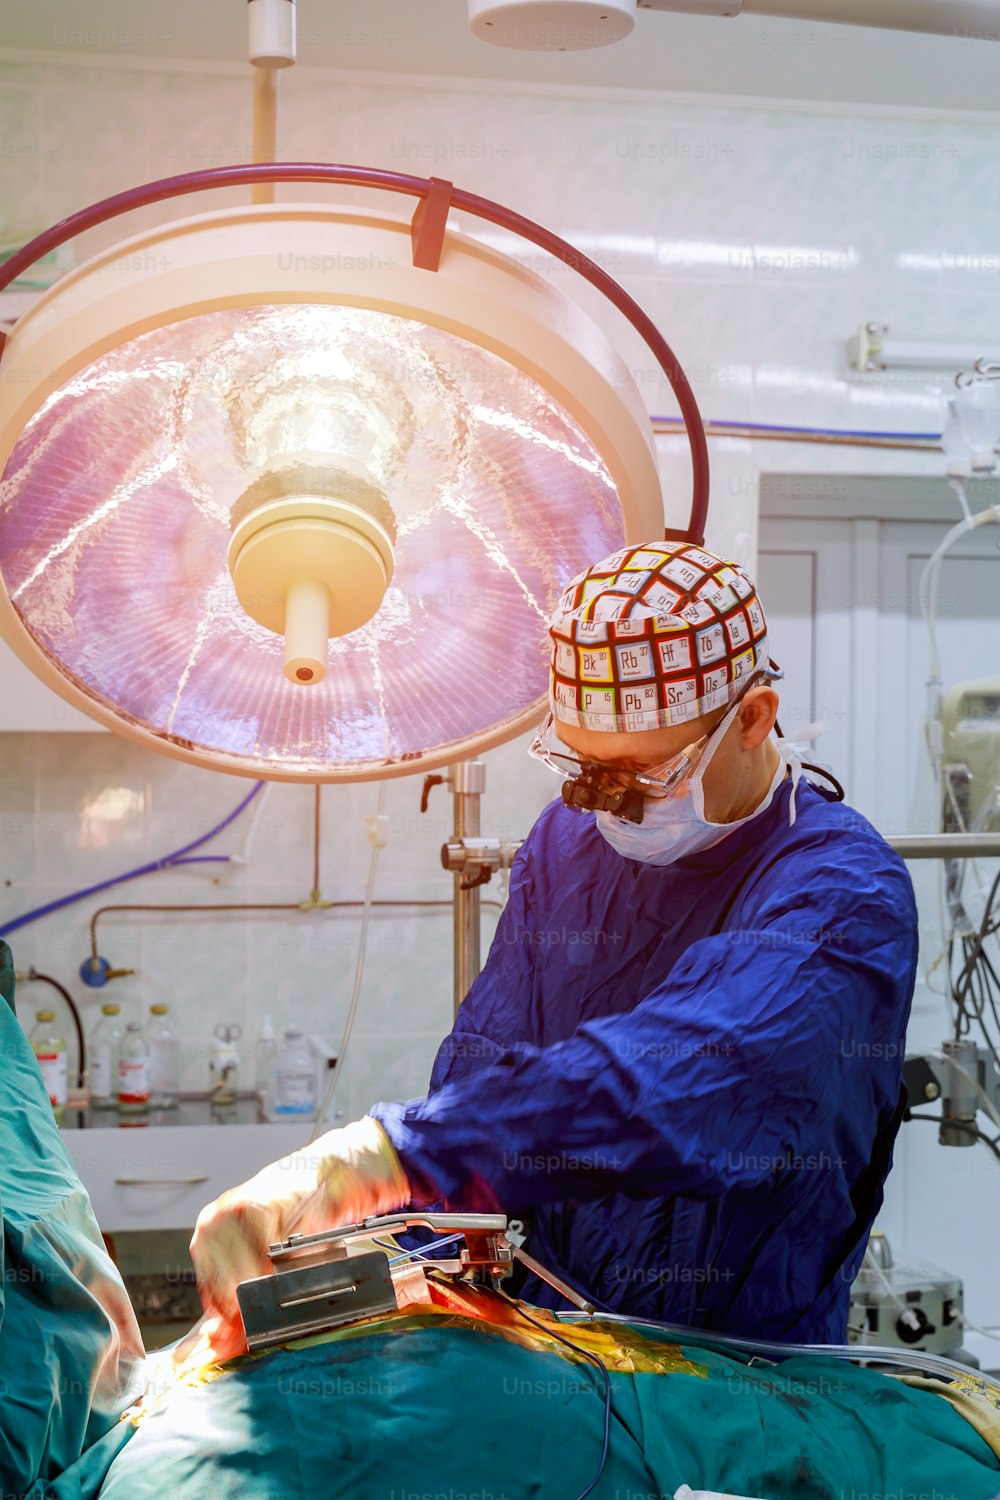 Equipo médico de quirófano de cirugía con equipo de electrocauterio para centro de cirugía de emergencia cardiovascular.